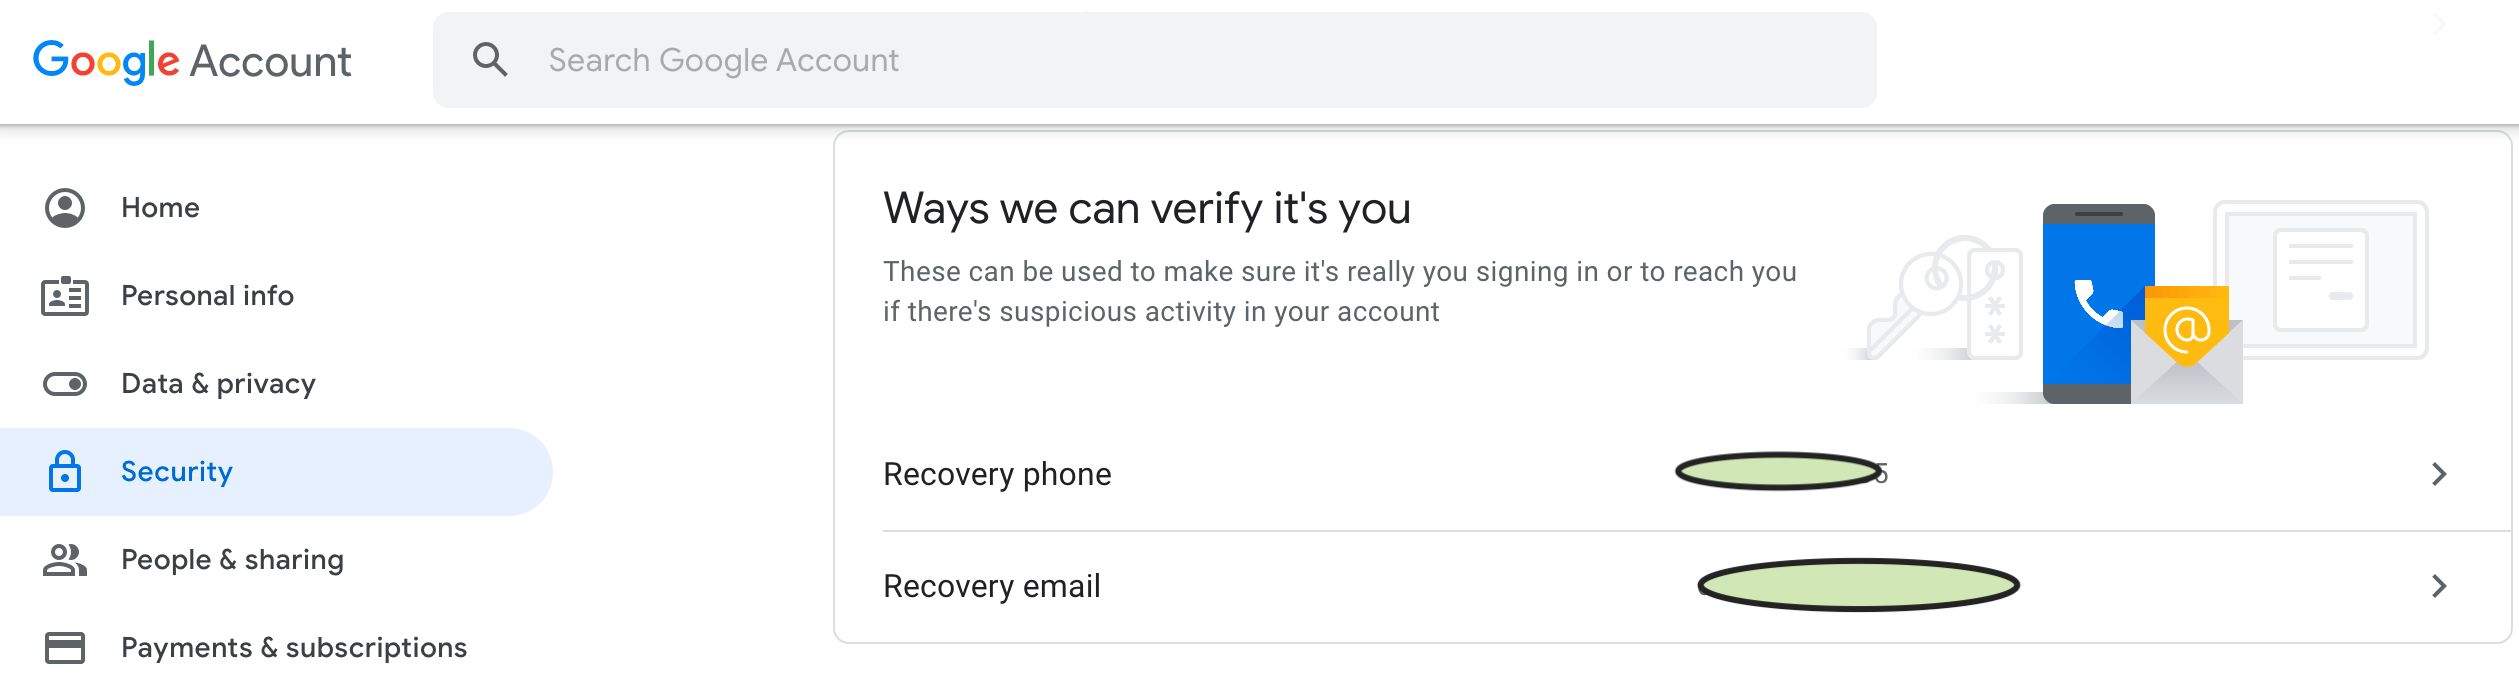 Google verification page